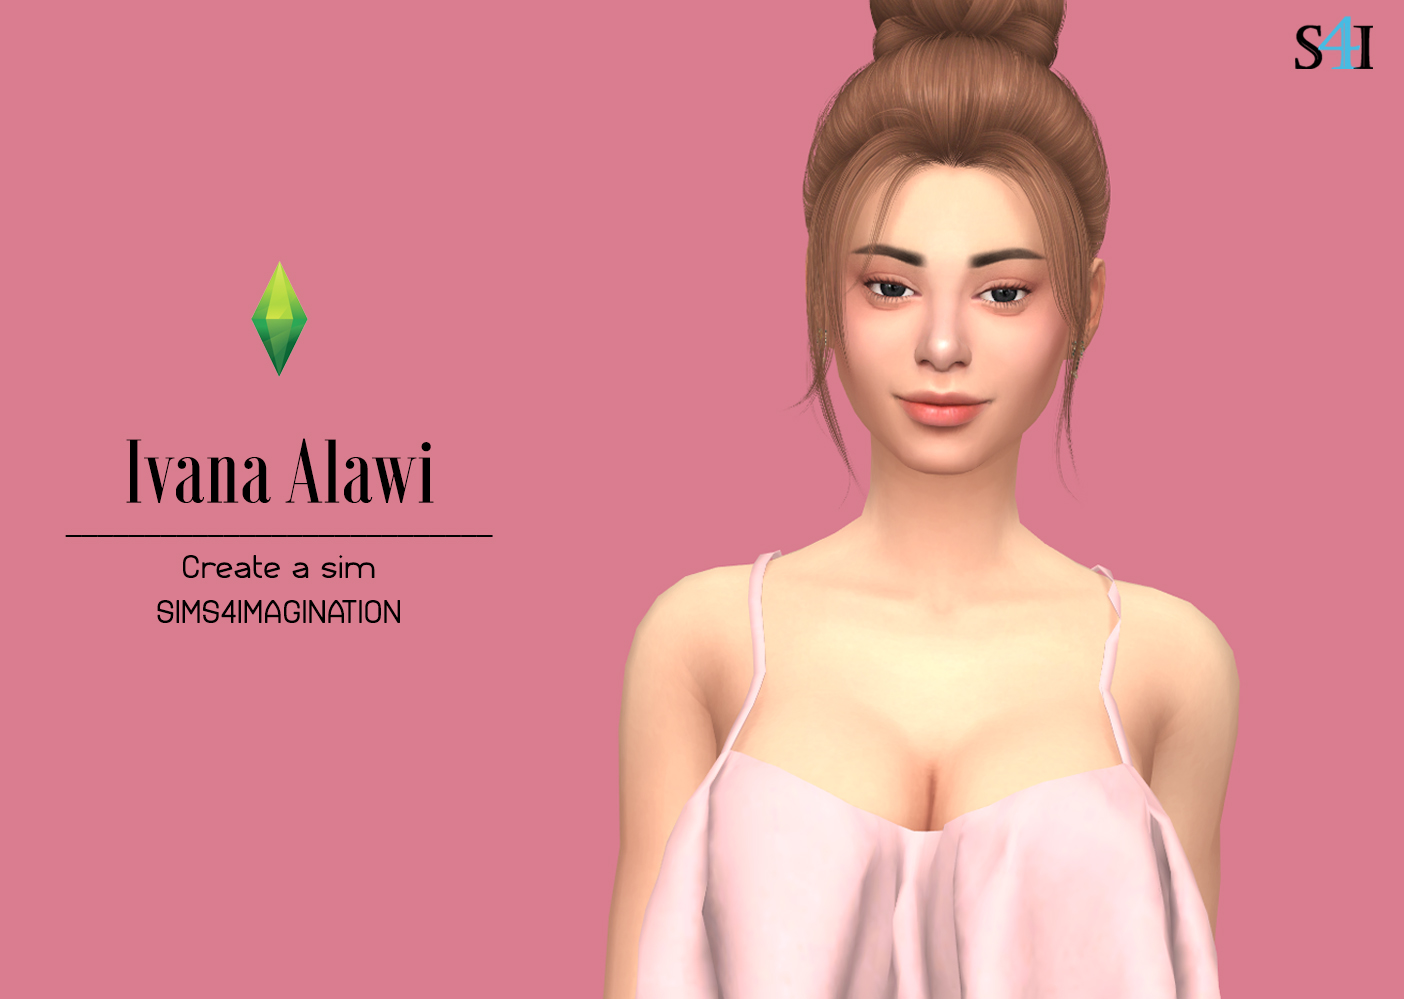 My Sims 4 CAS: Ivana Alawi - Imagination Sims 4 CAS